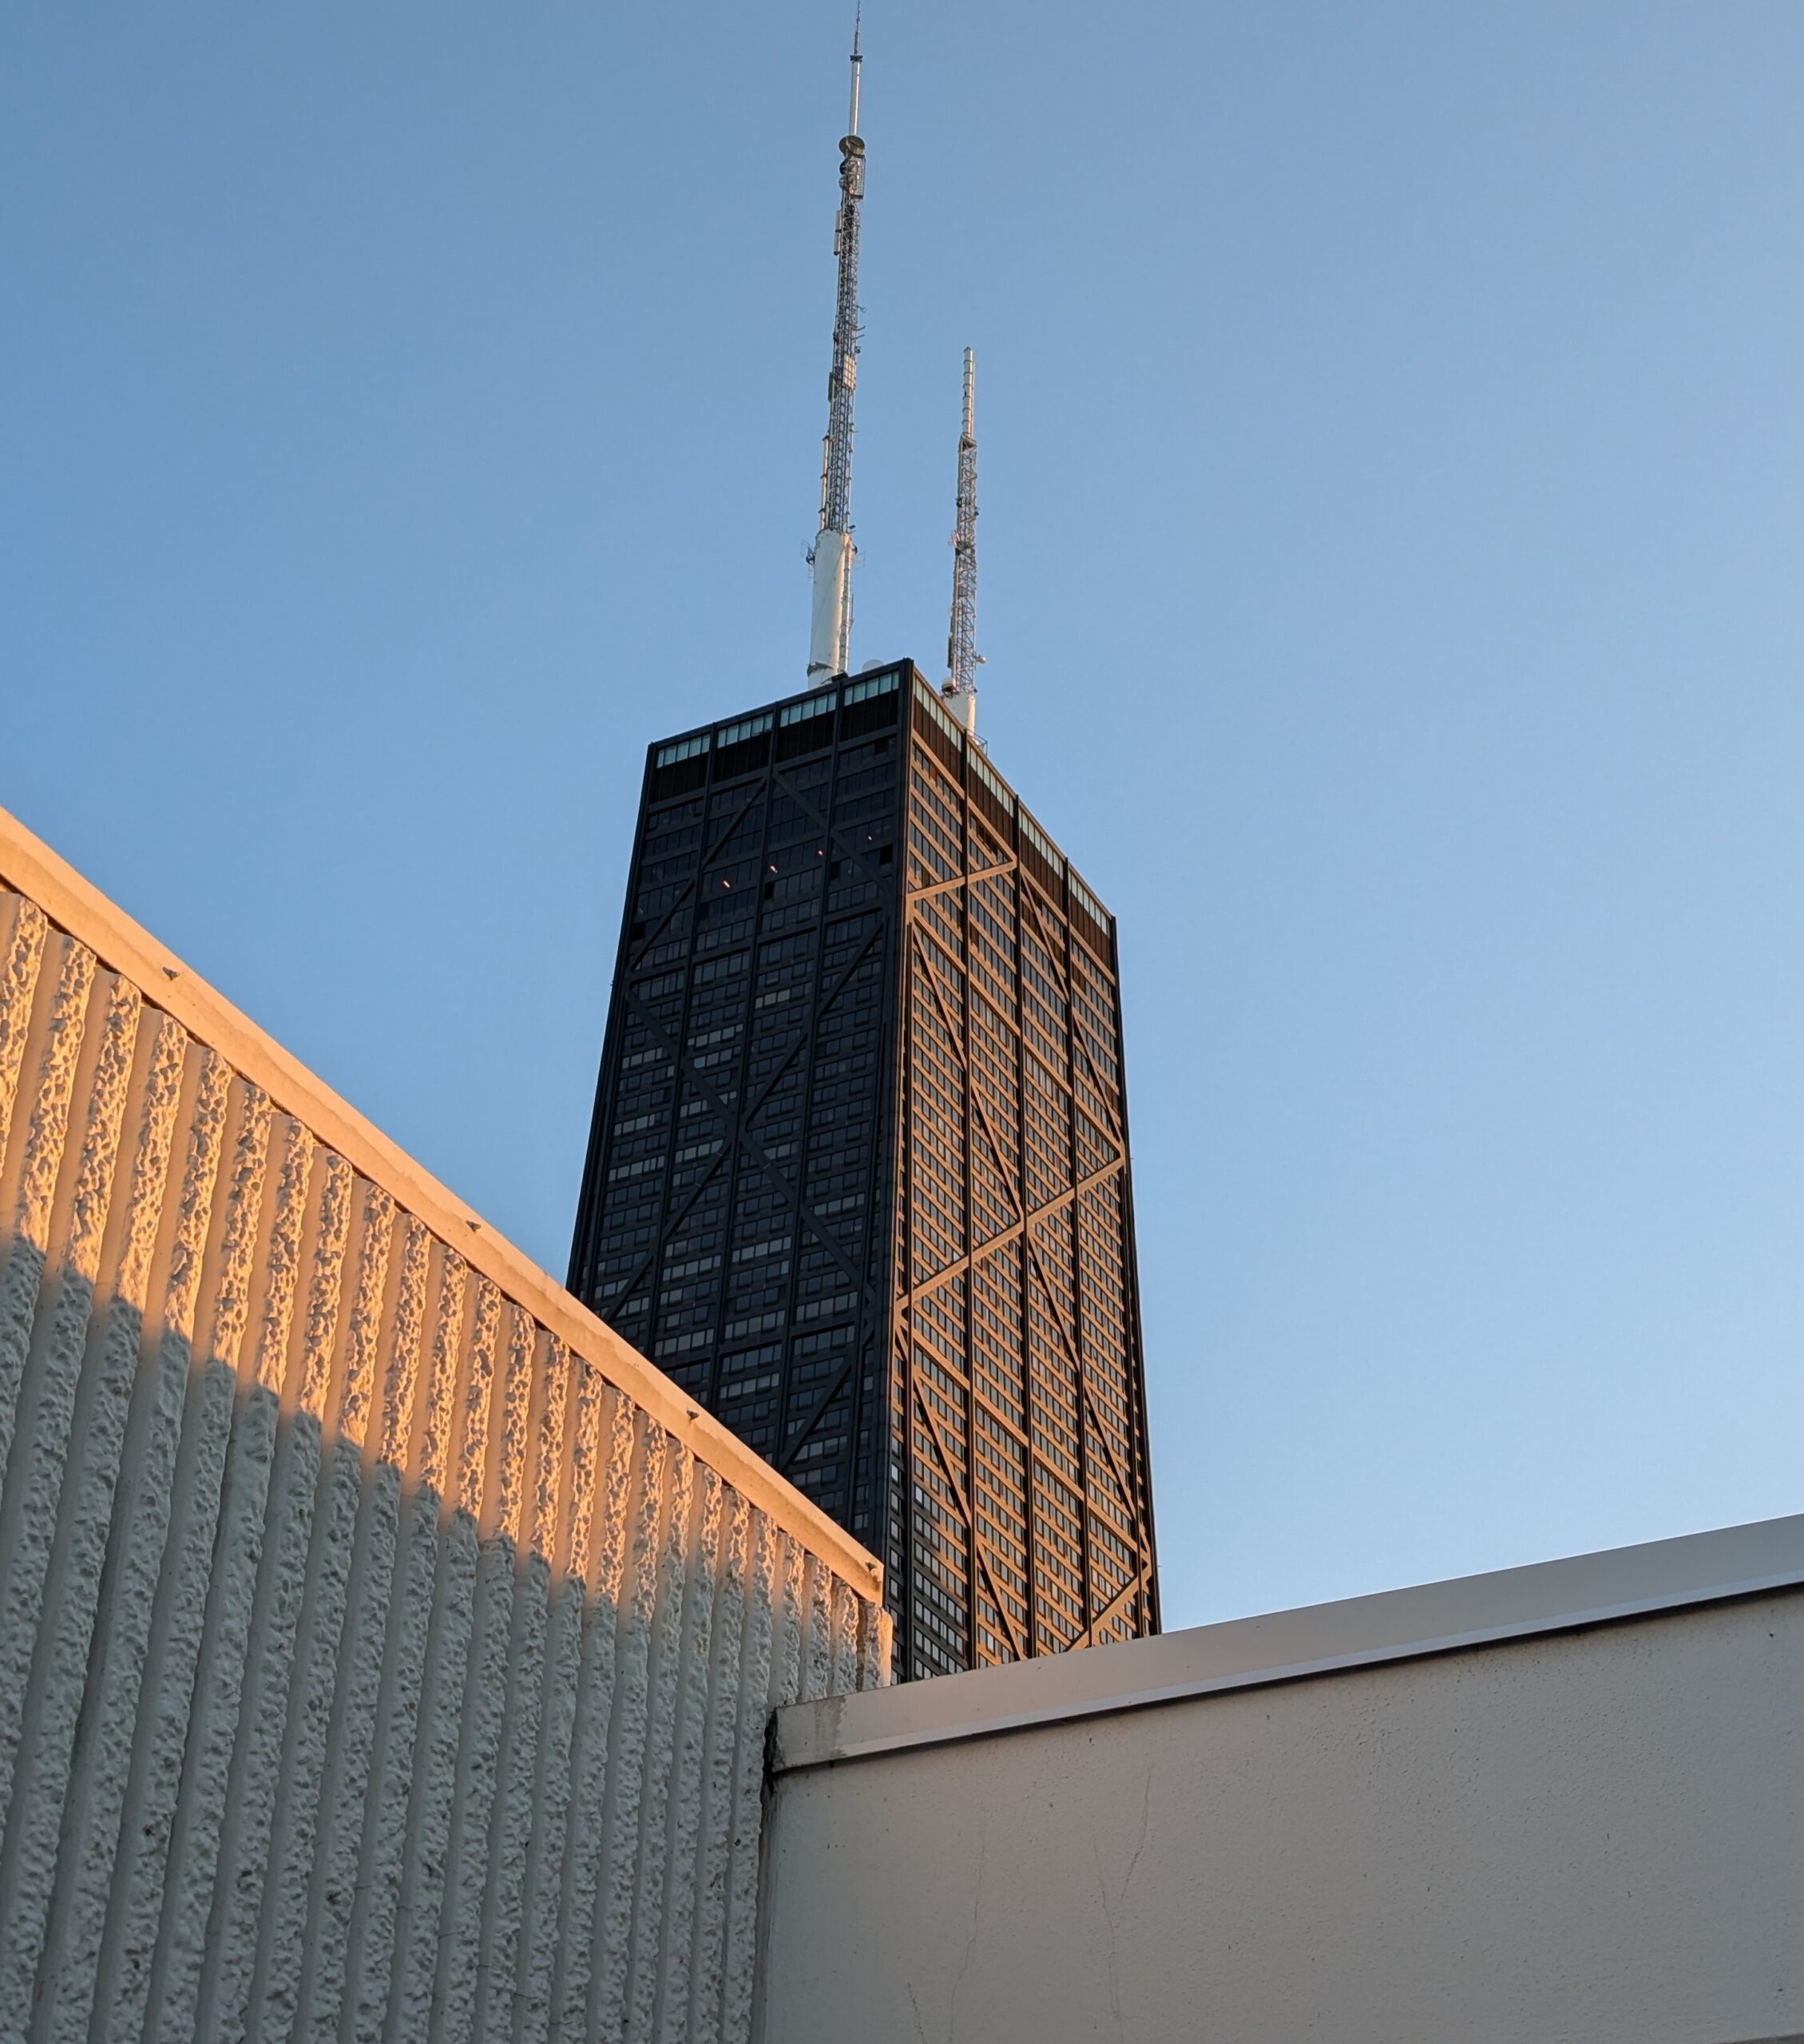 Chicago’s iconic Hancock building